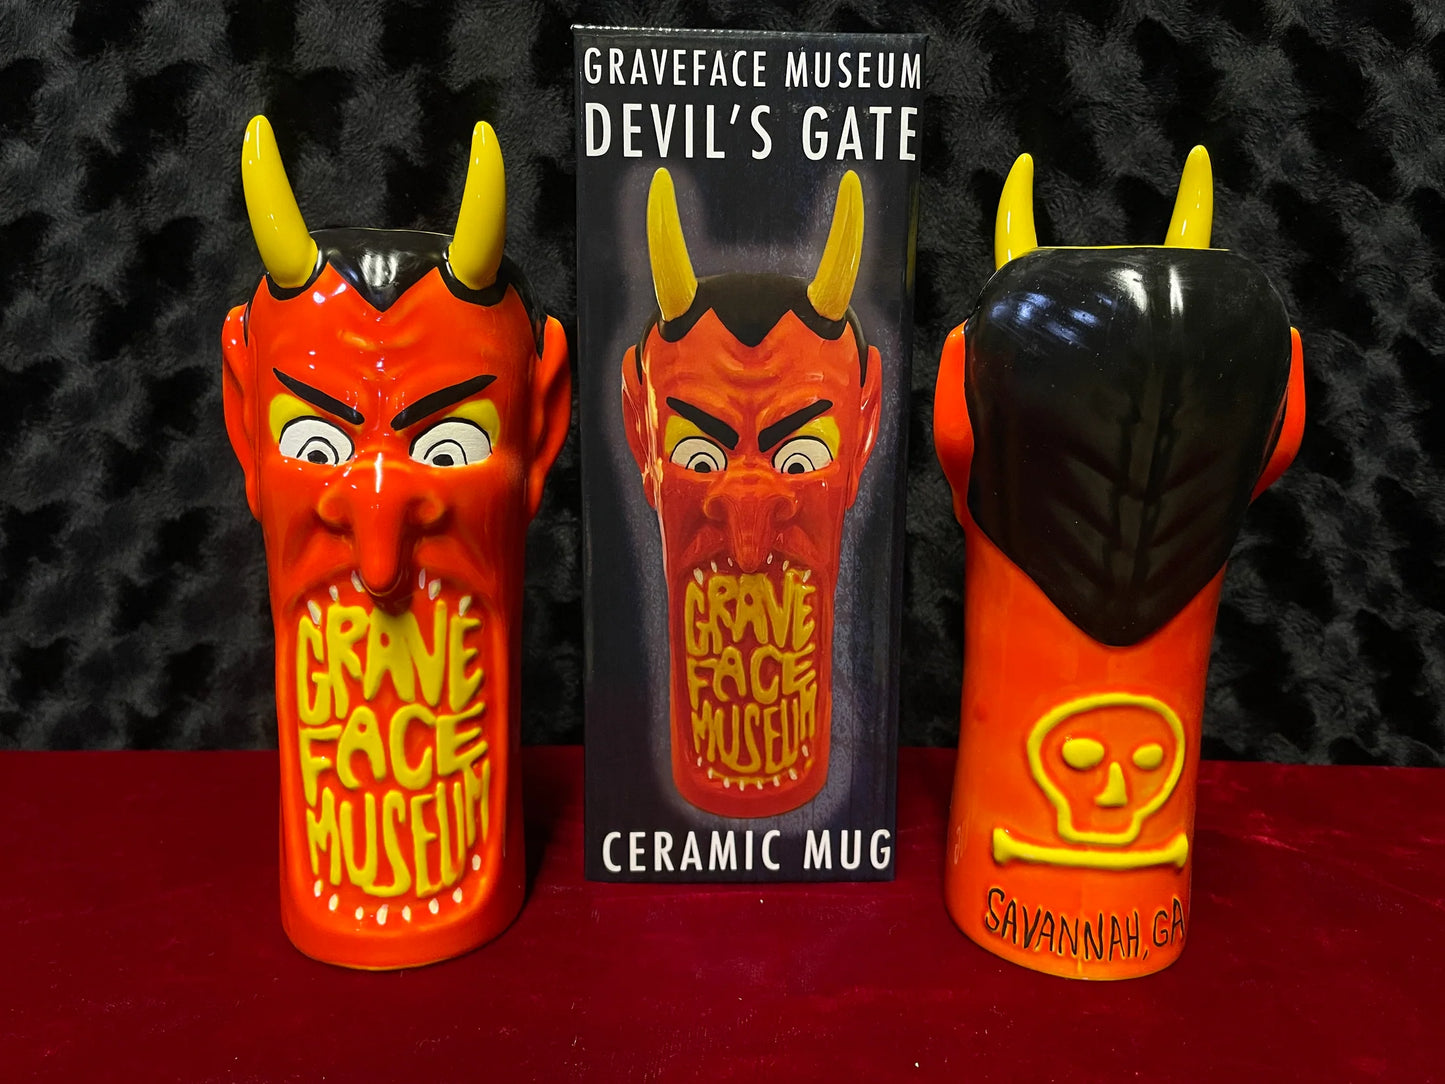 Graveface Museum "Devil's Gate" Ceramic Mug